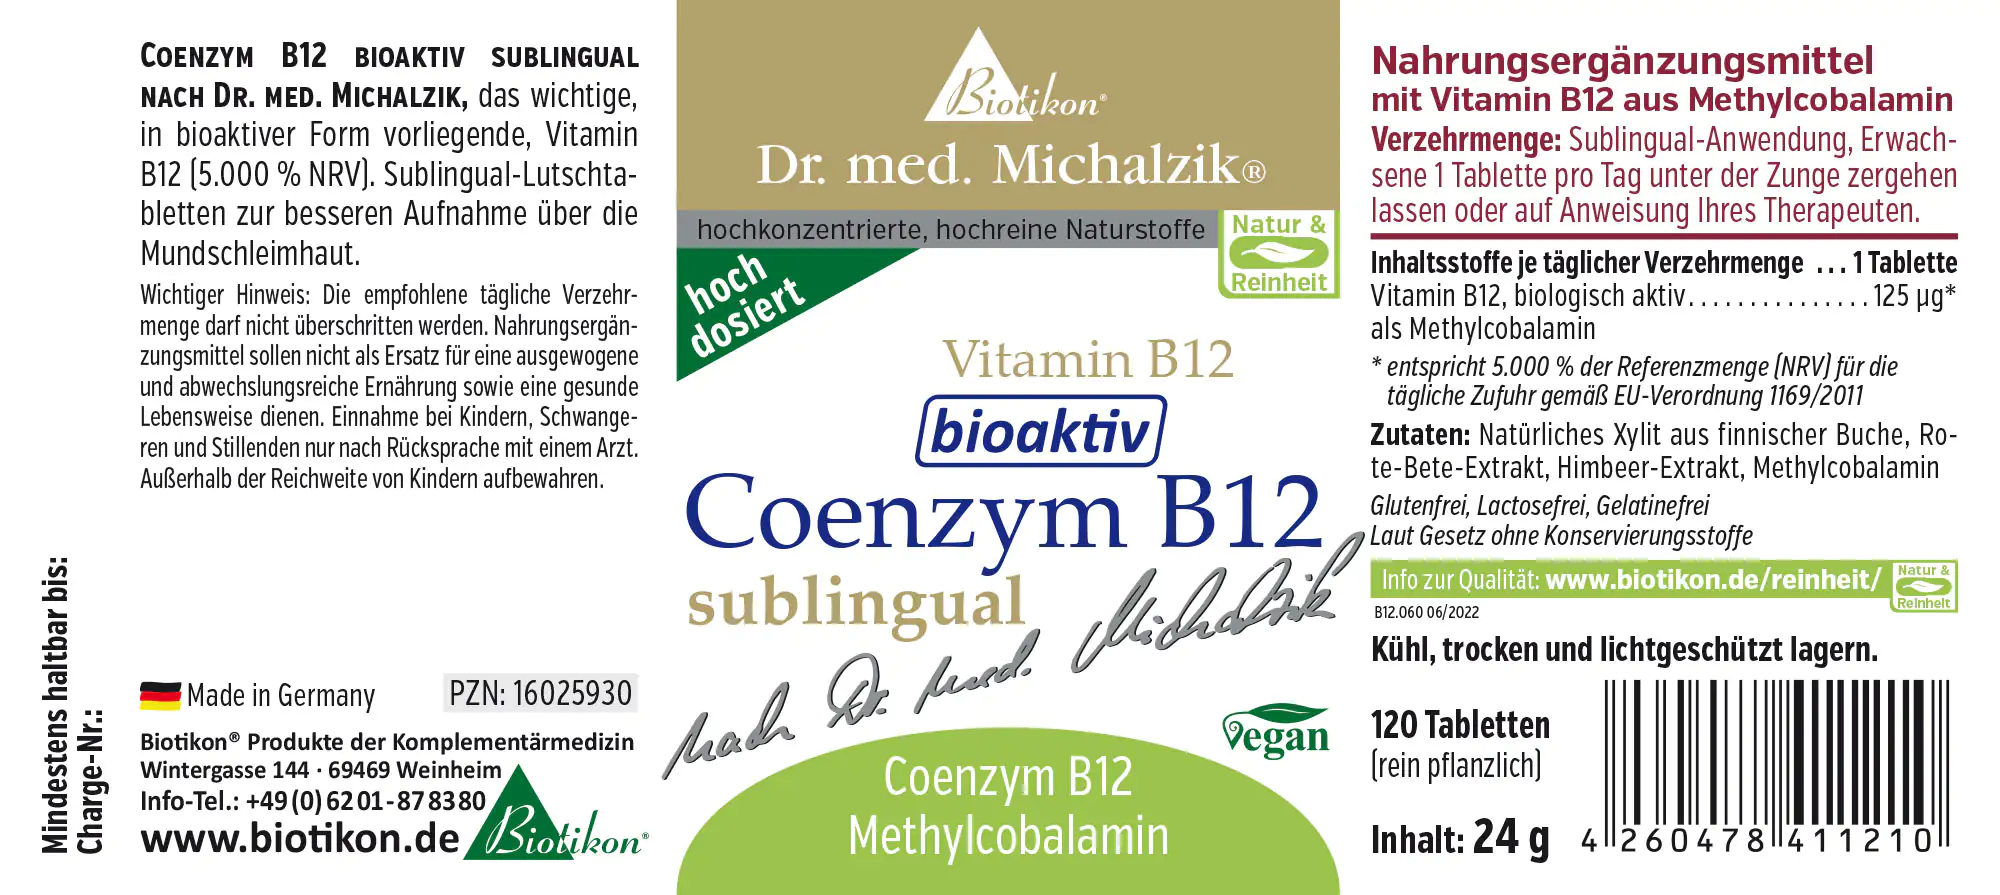 Coenzym B12 bioaktiv, sublingual